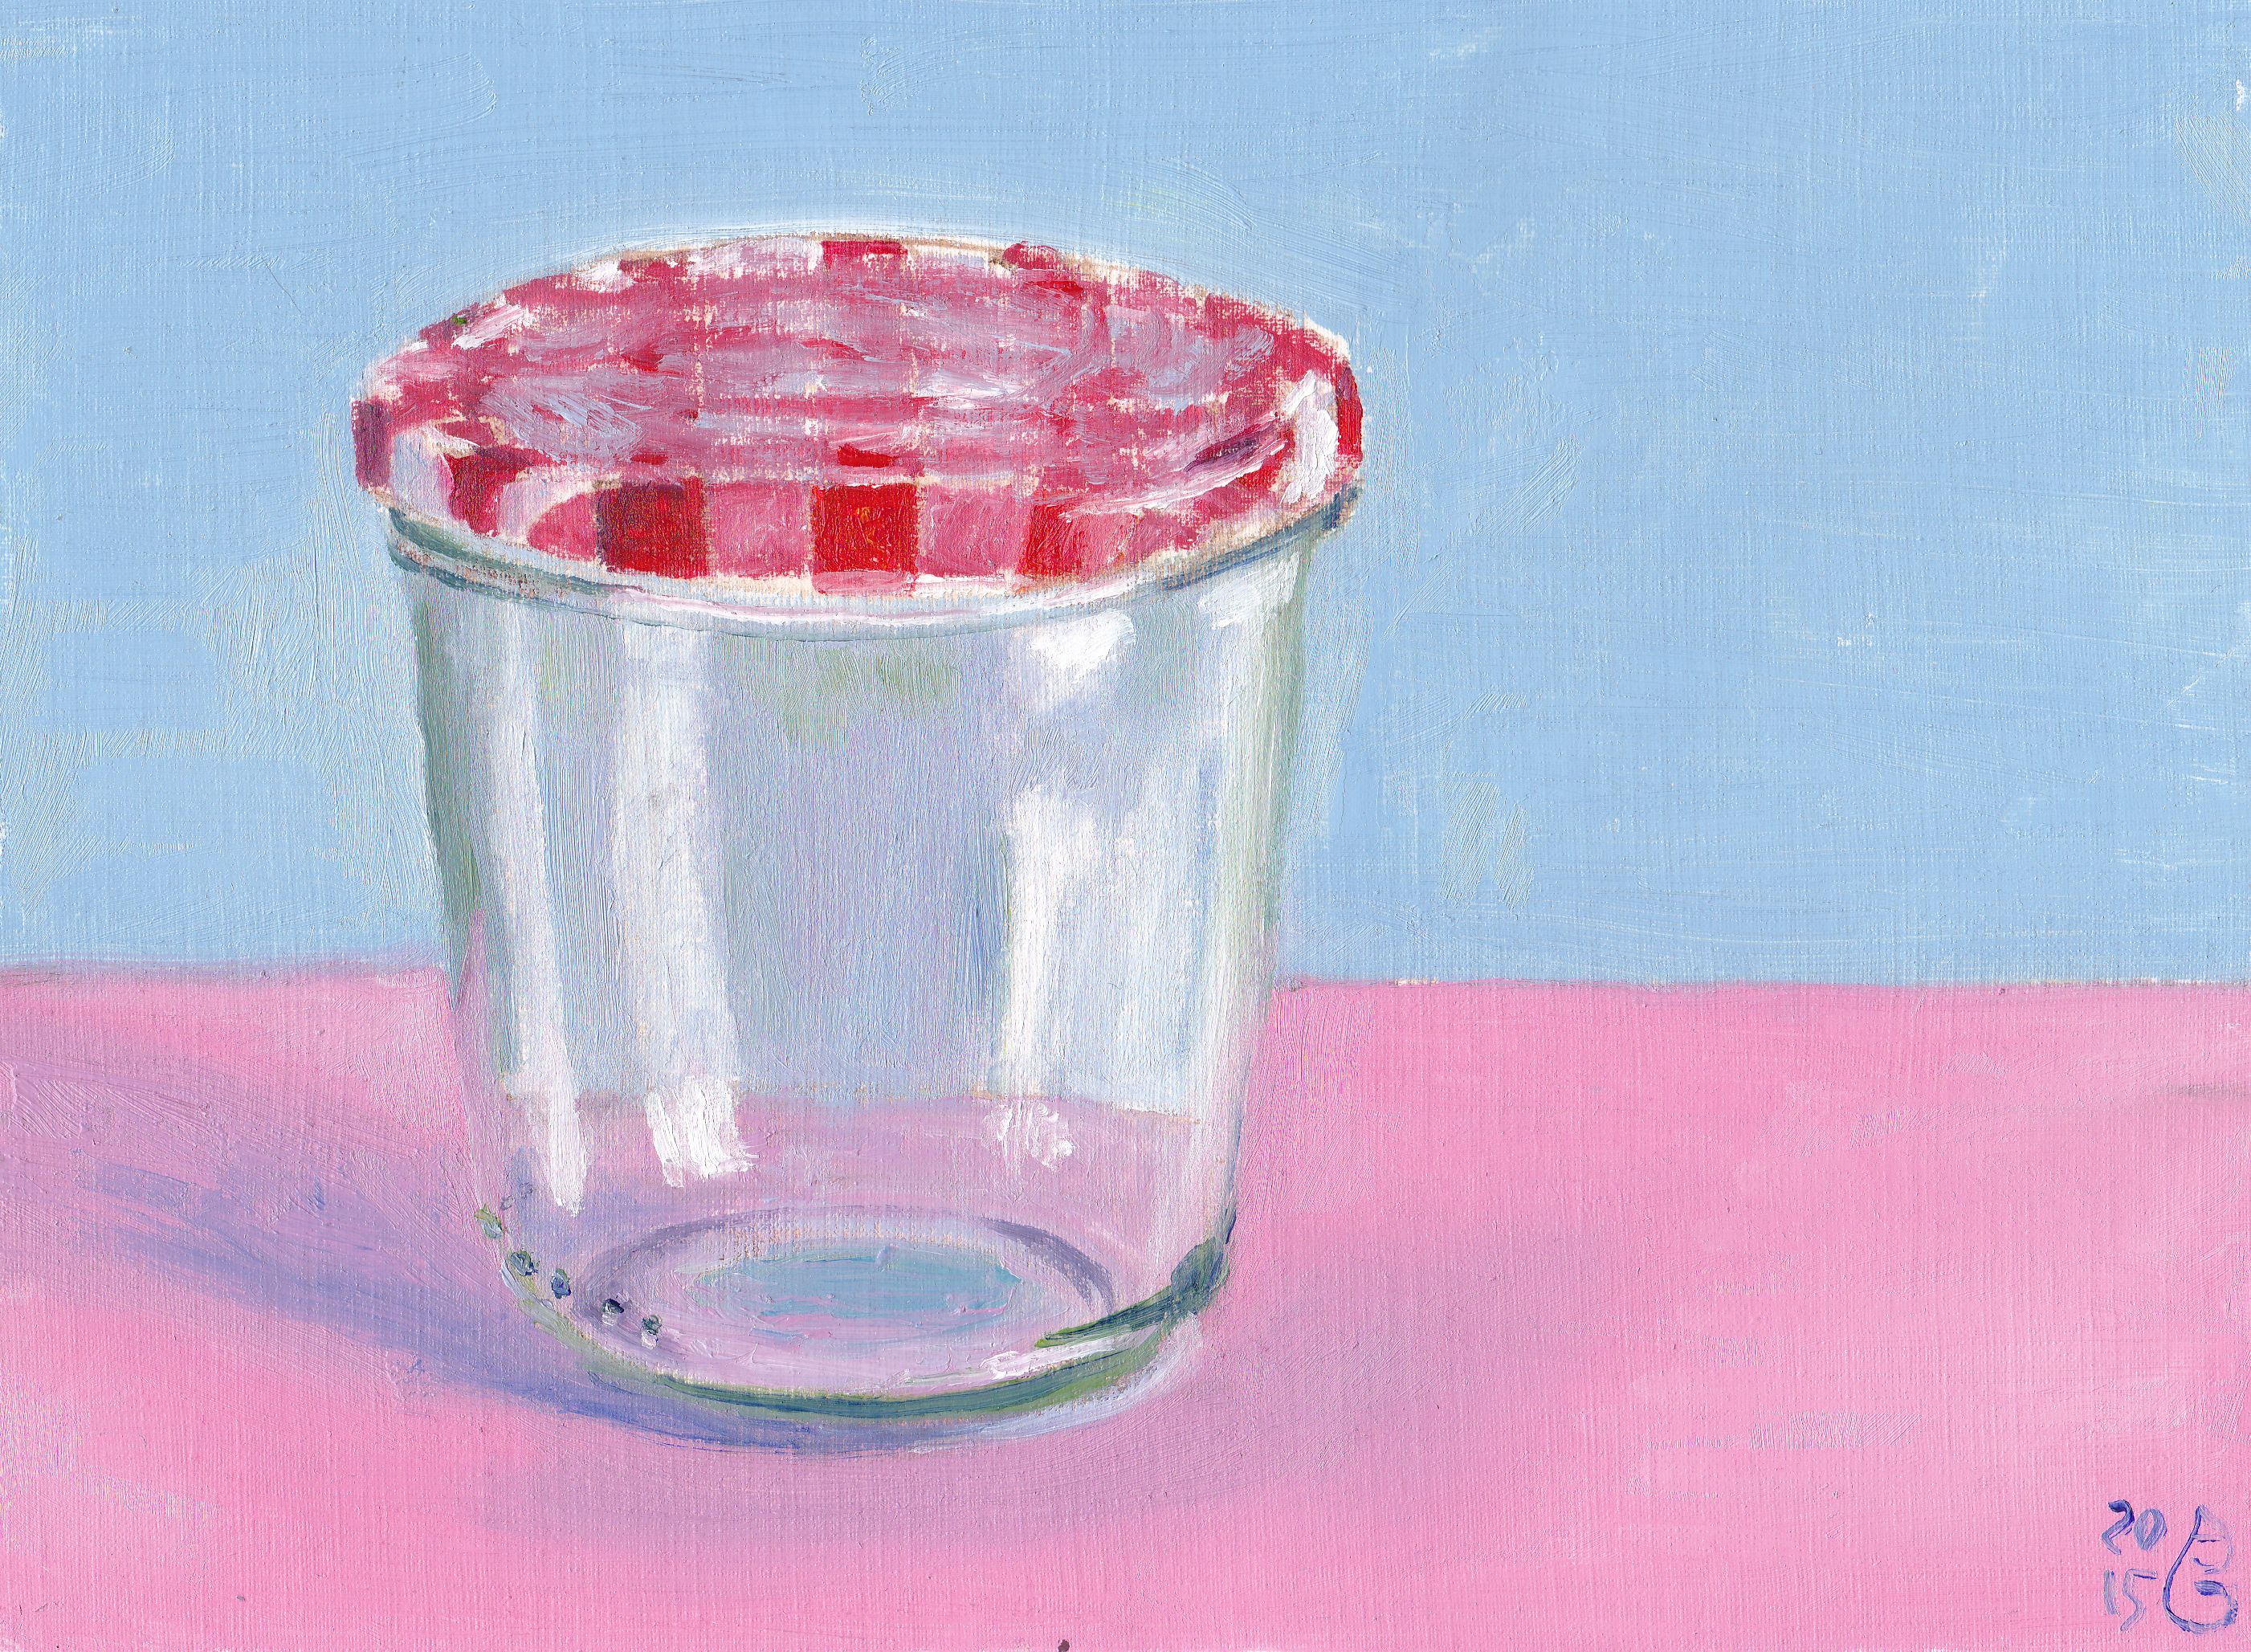 Glas in Babyfarben/ Baby-coloured jar